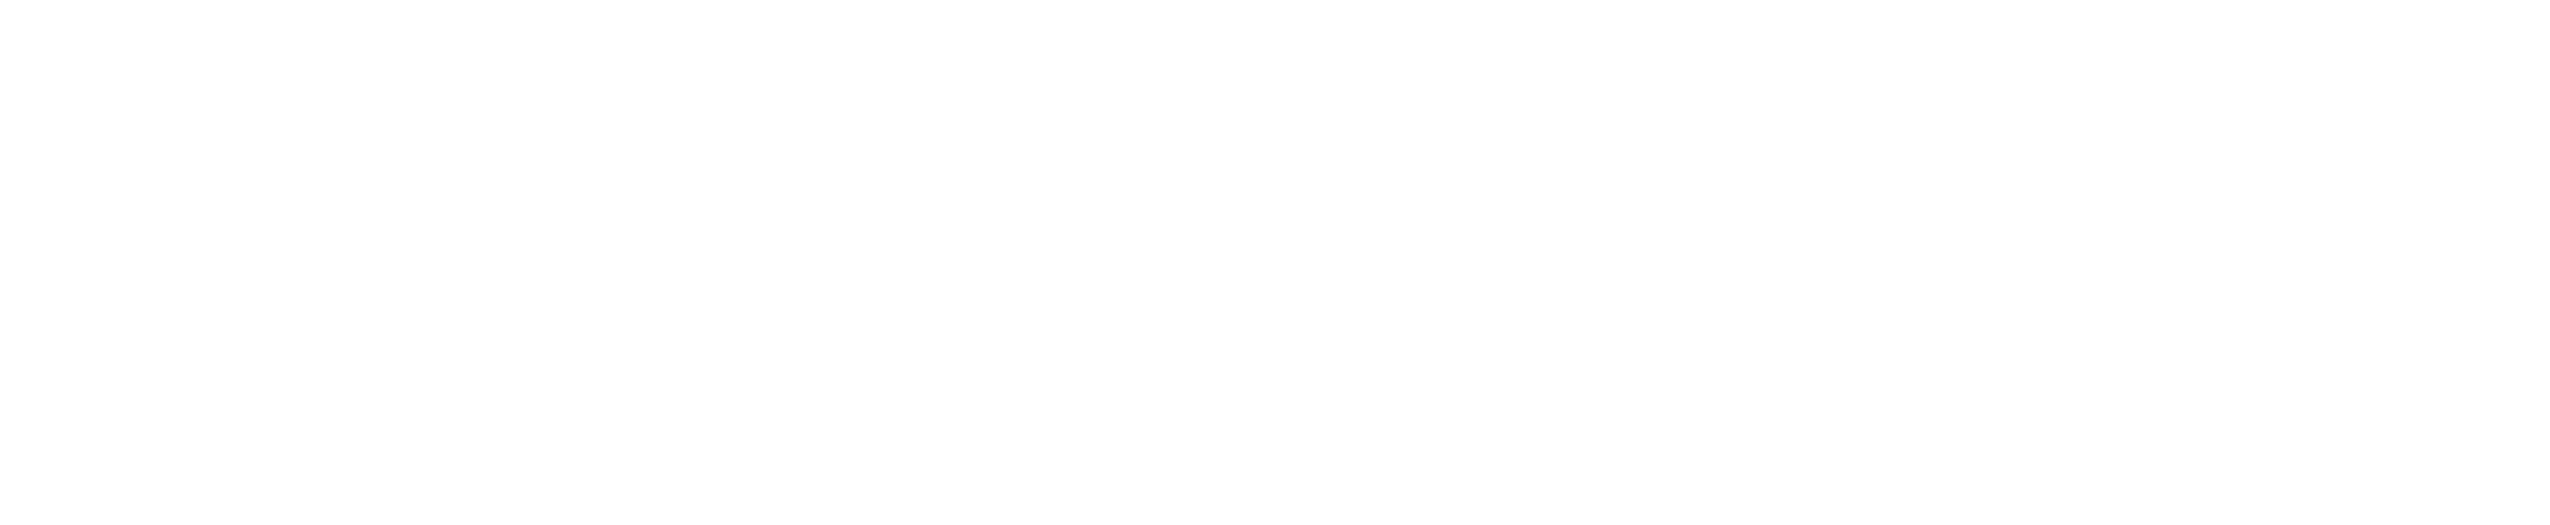 Tallahassee Senior Center Foundation